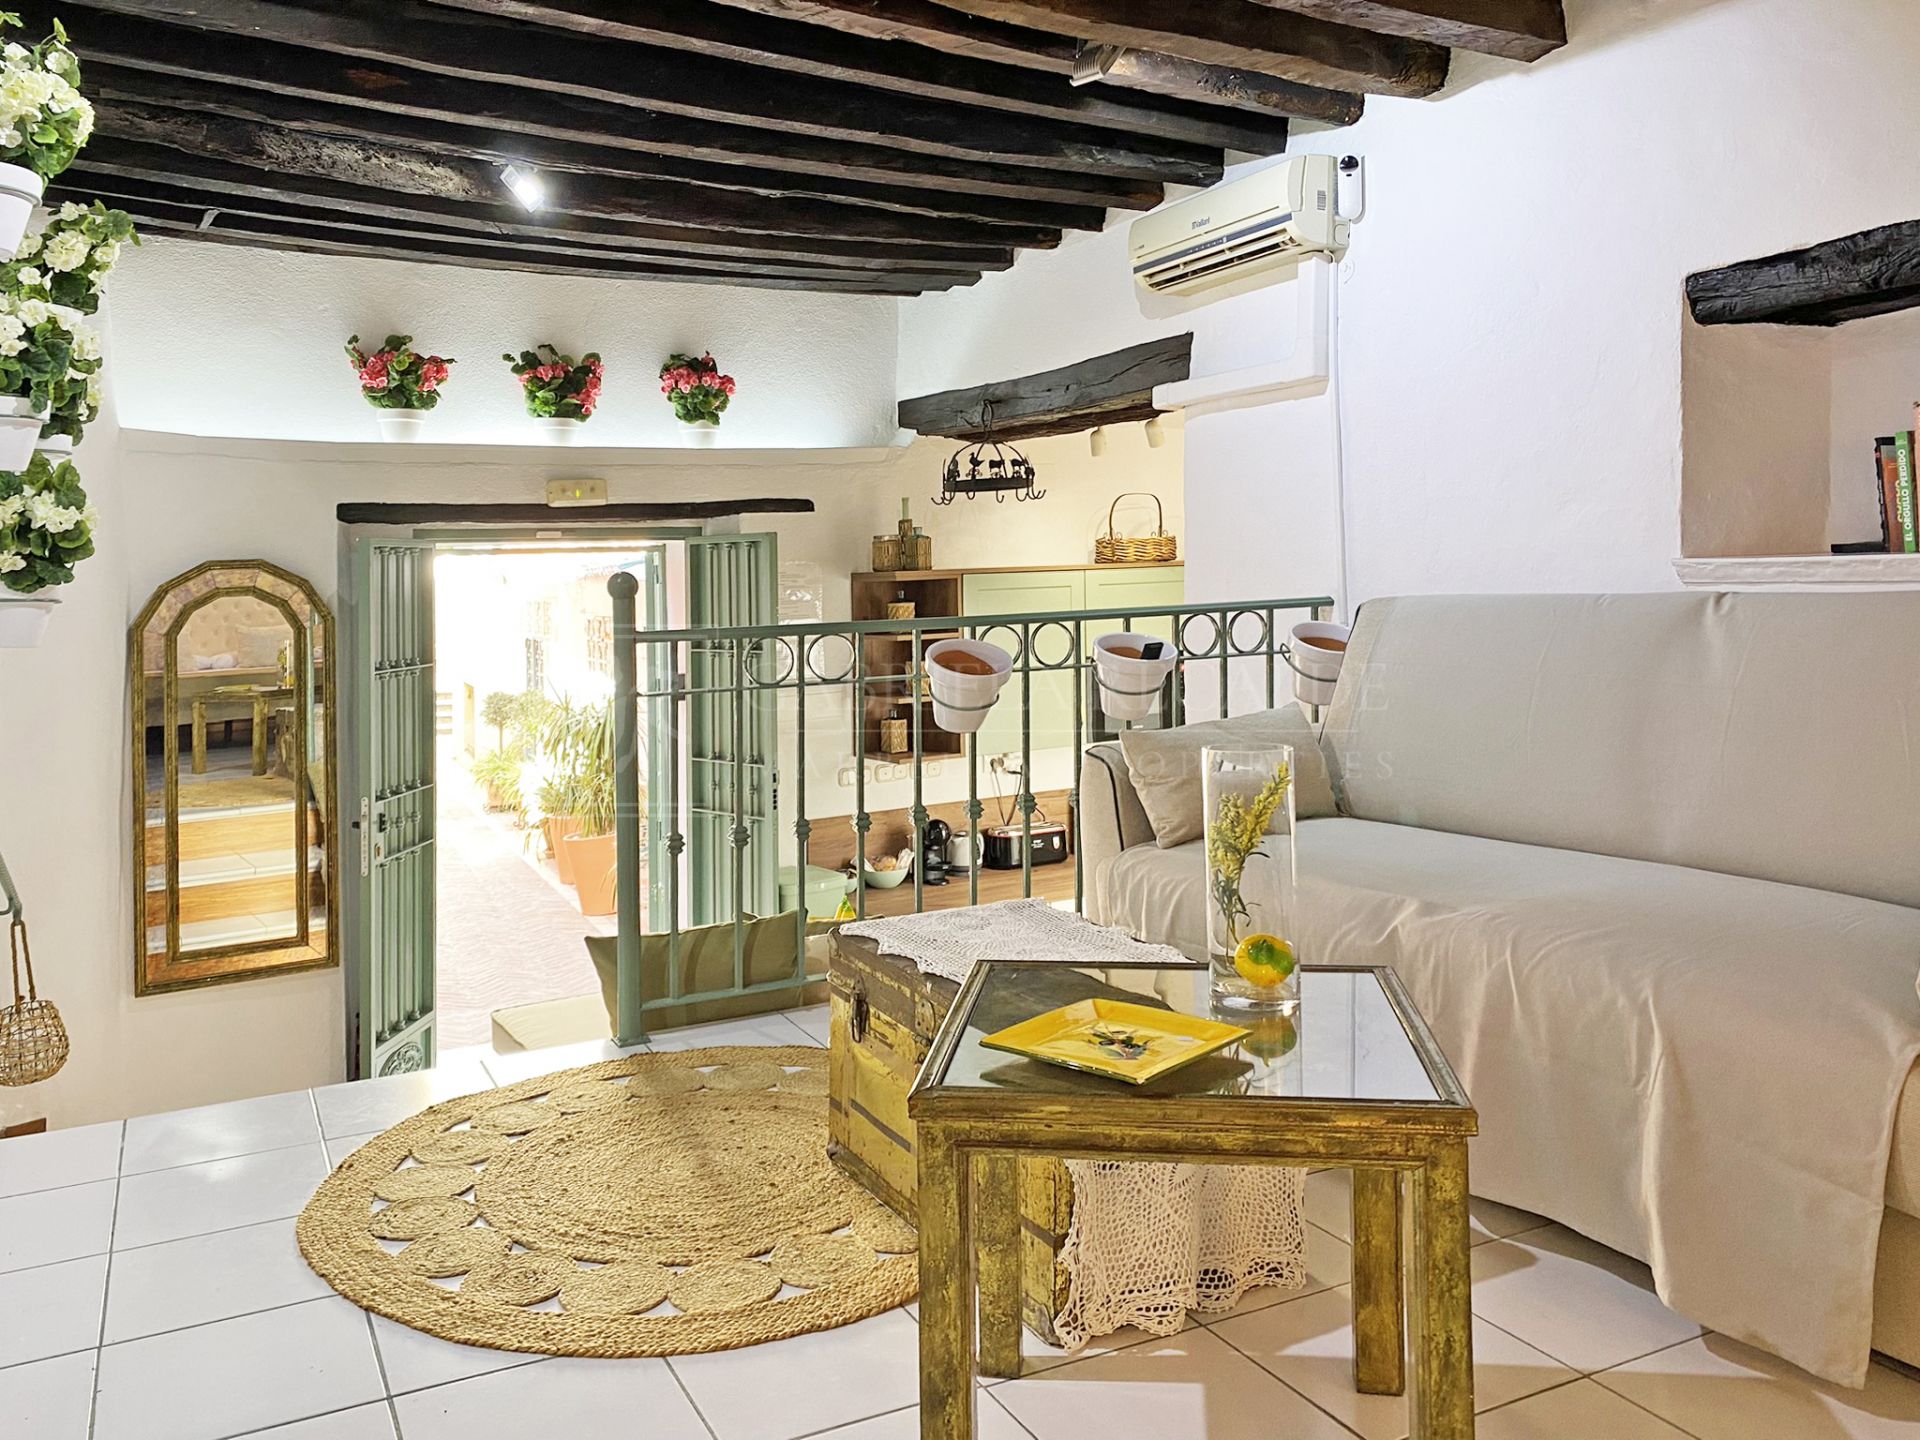 Encantador Apartamento de Dos Dormitorios de Estilo Andaluz